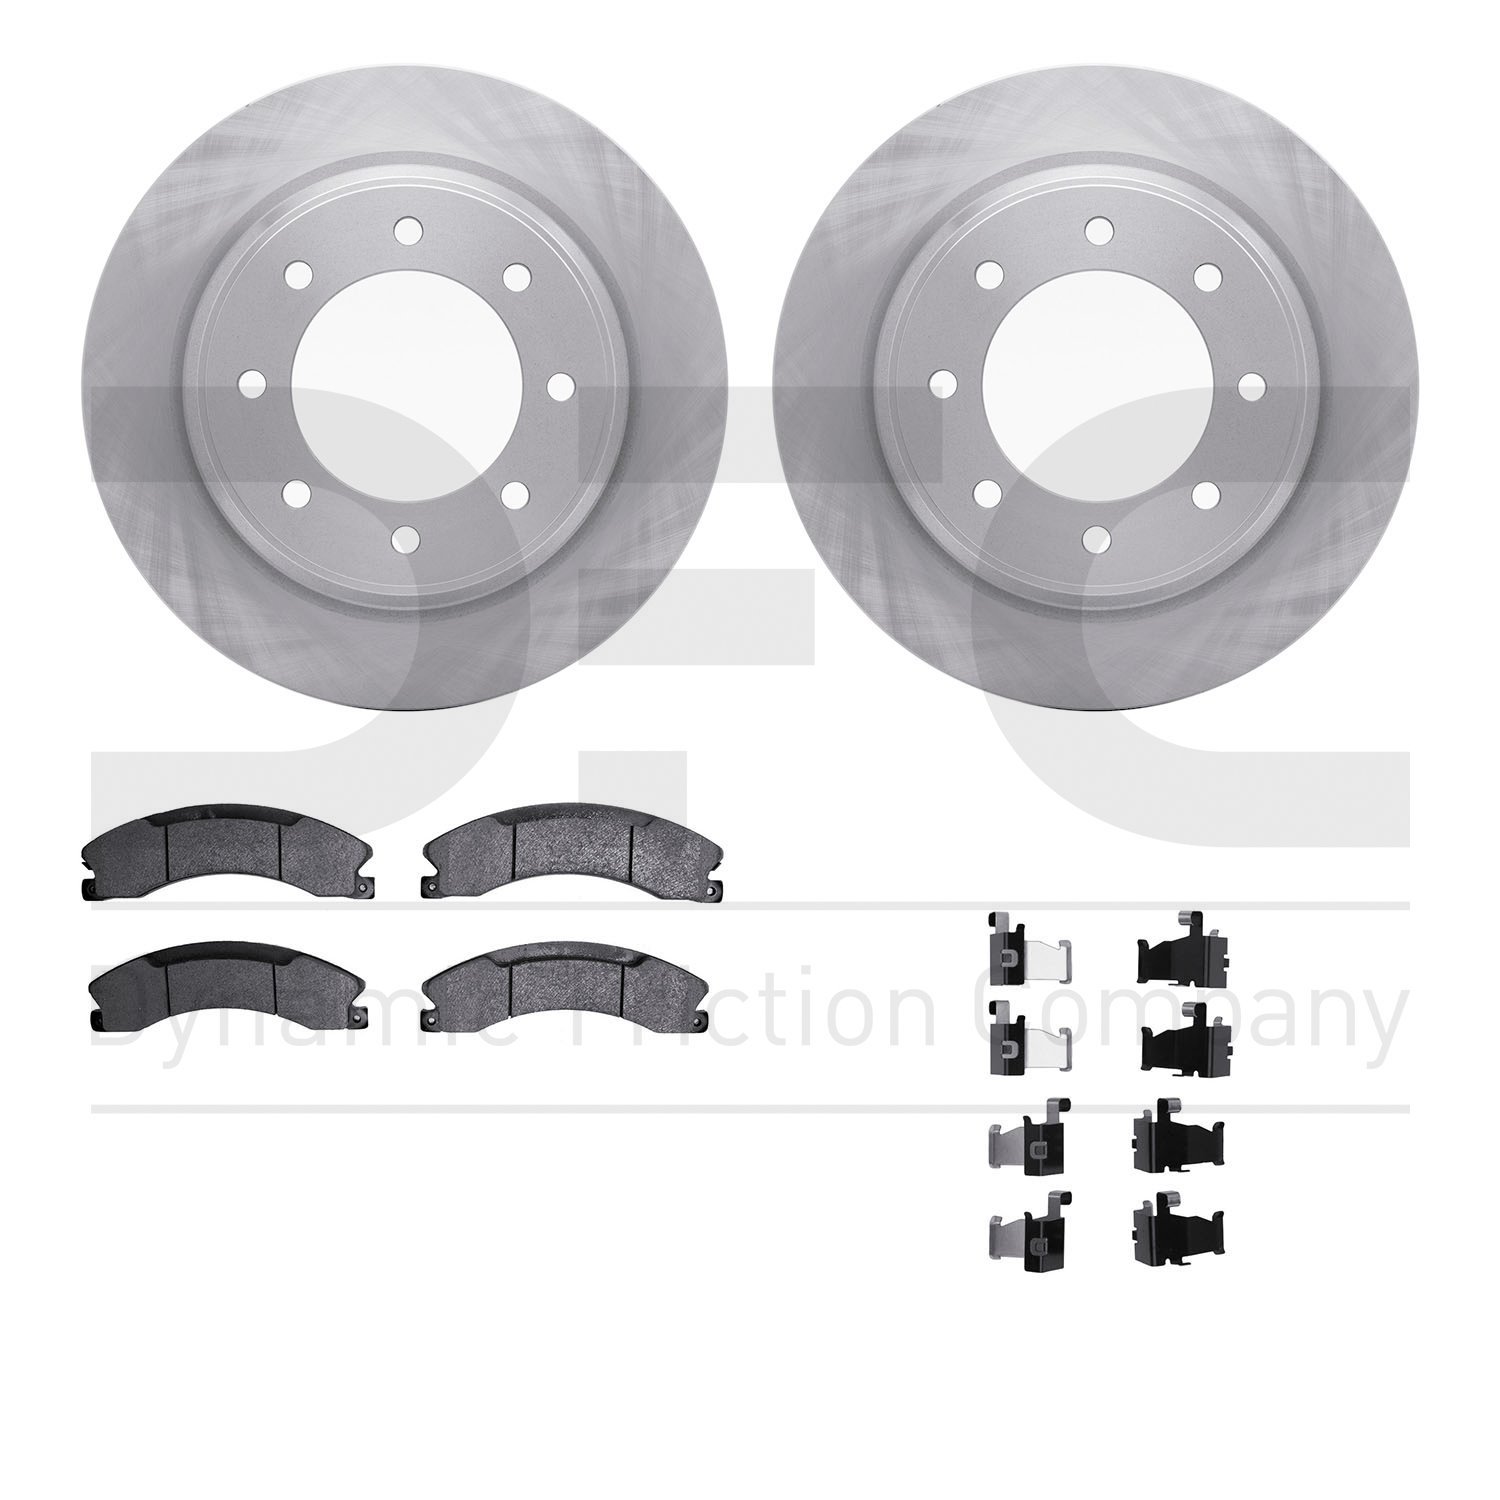 6412-67016 Brake Rotors with Ultimate-Duty Brake Pads Kit & Hardware, 2012-2021 Infiniti/Nissan, Position: Rear